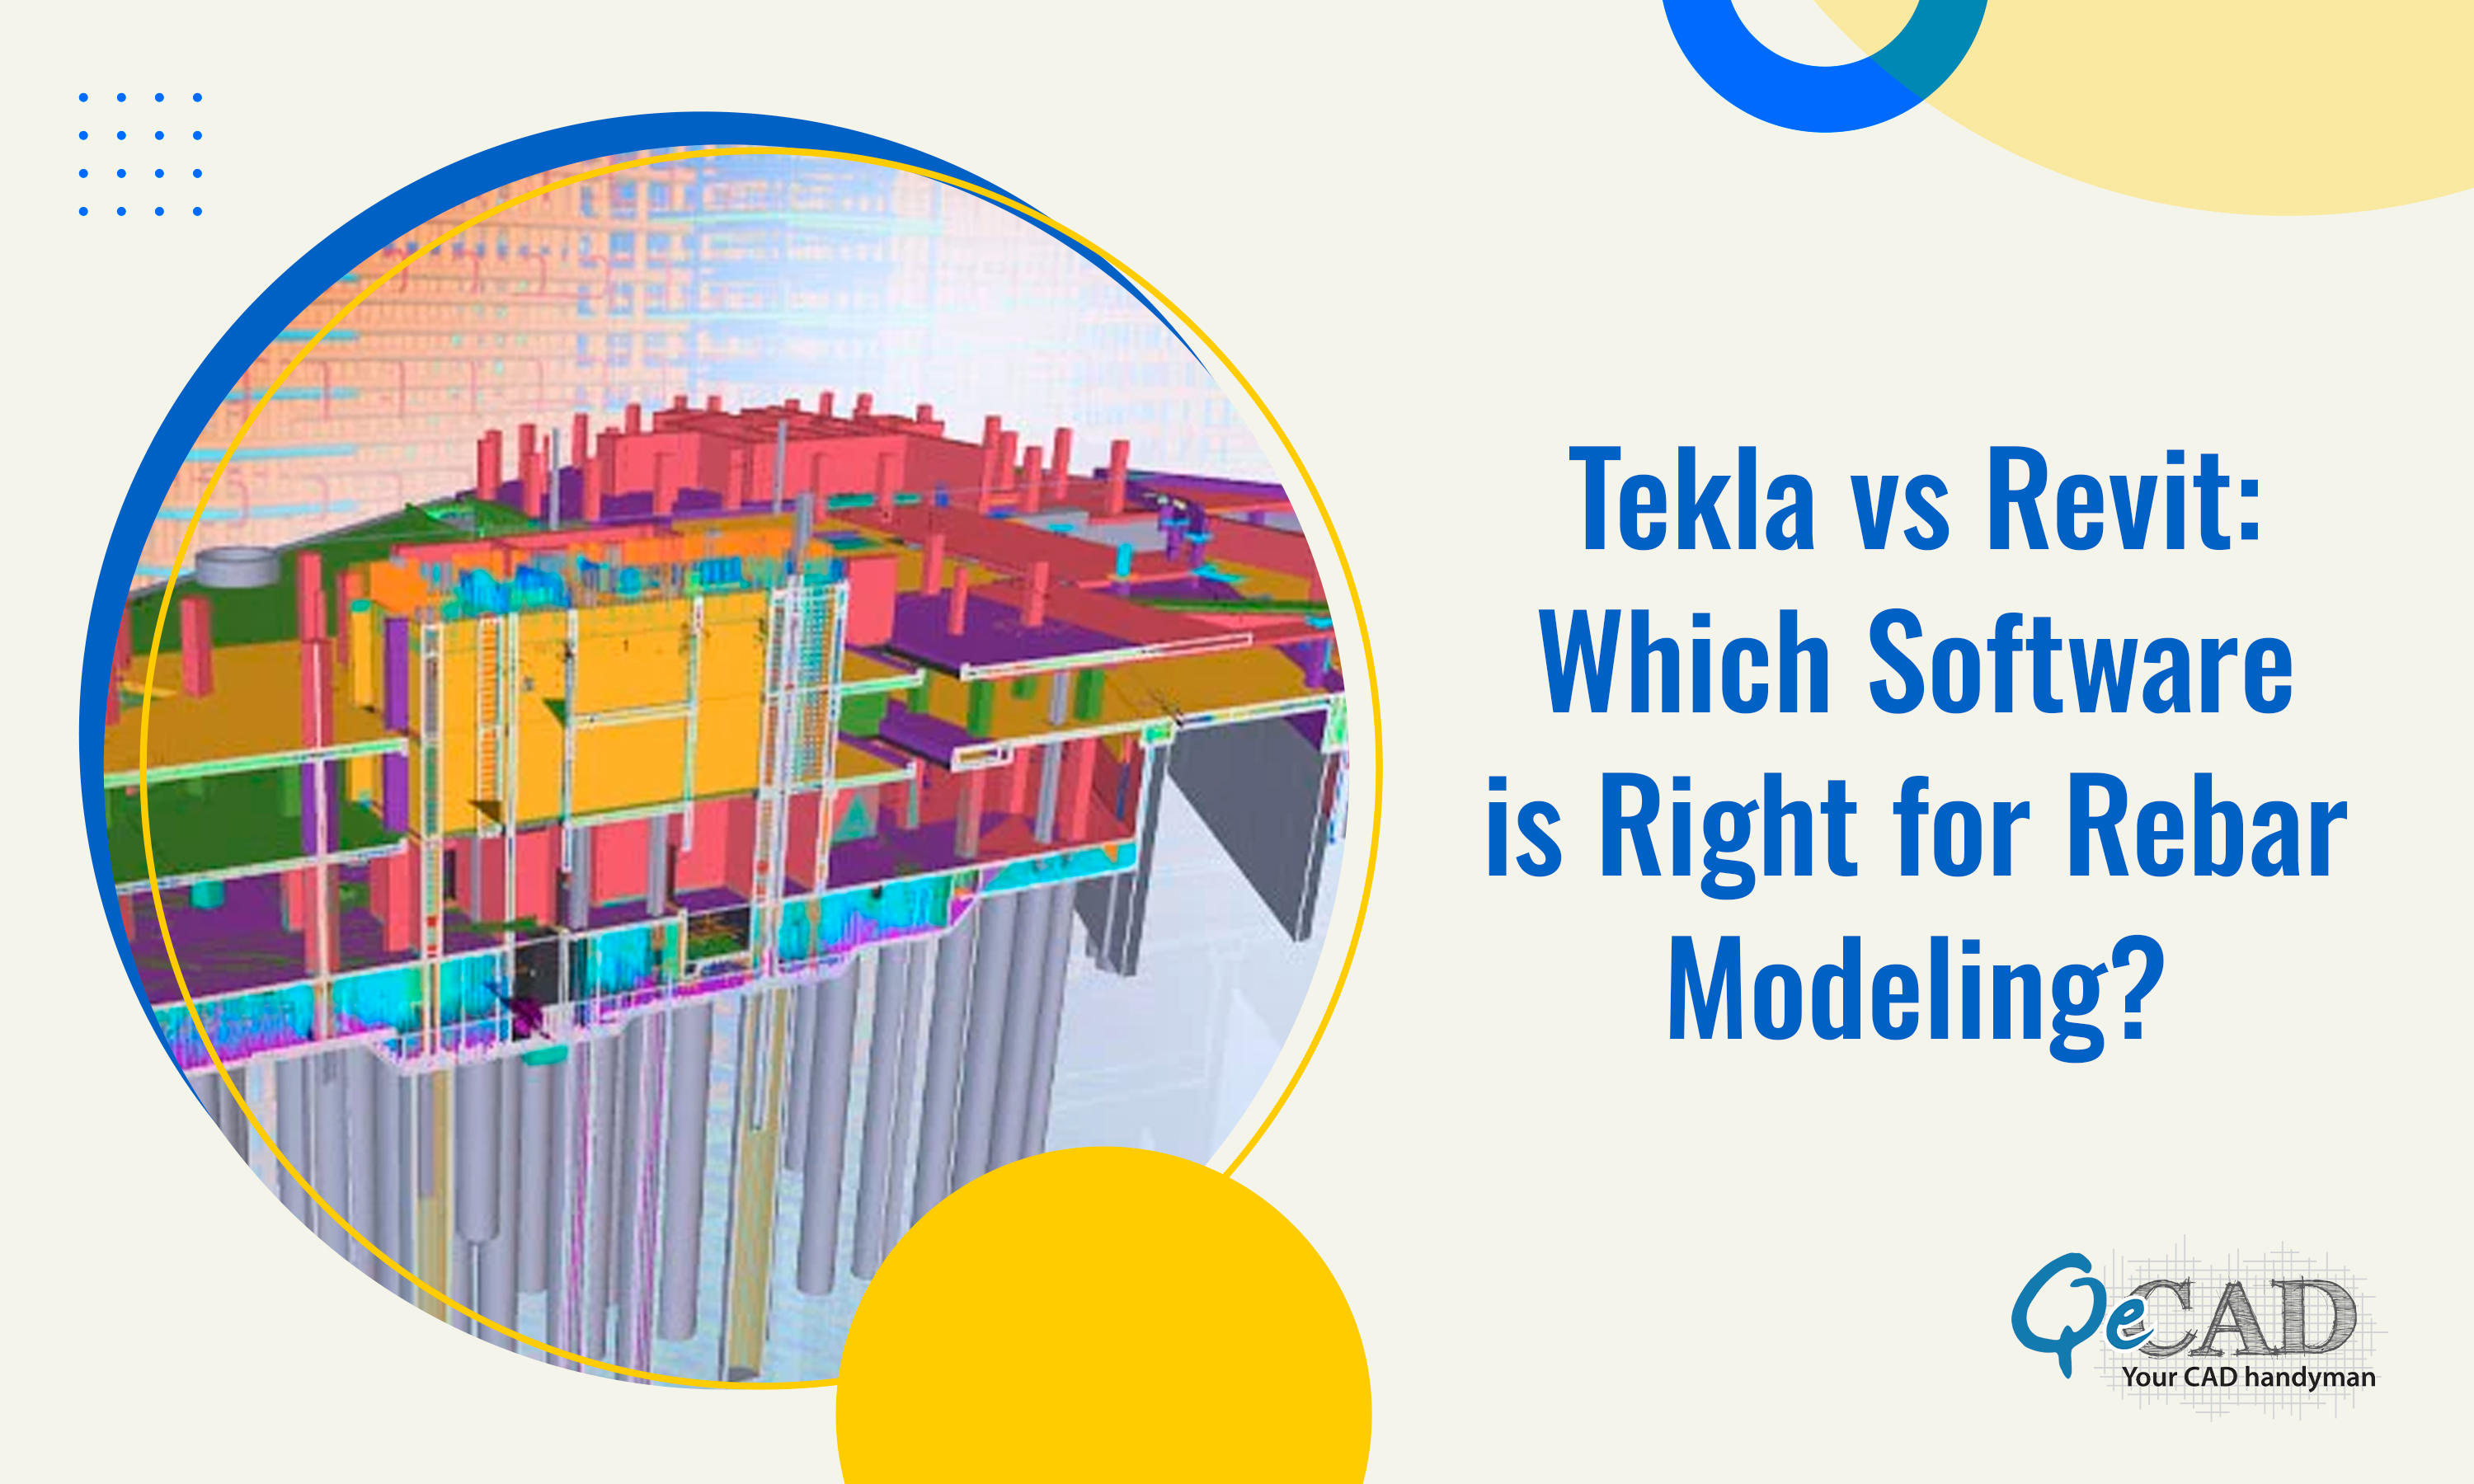 Tekla vs Revit: Which Software is Right for Rebar Modeling?